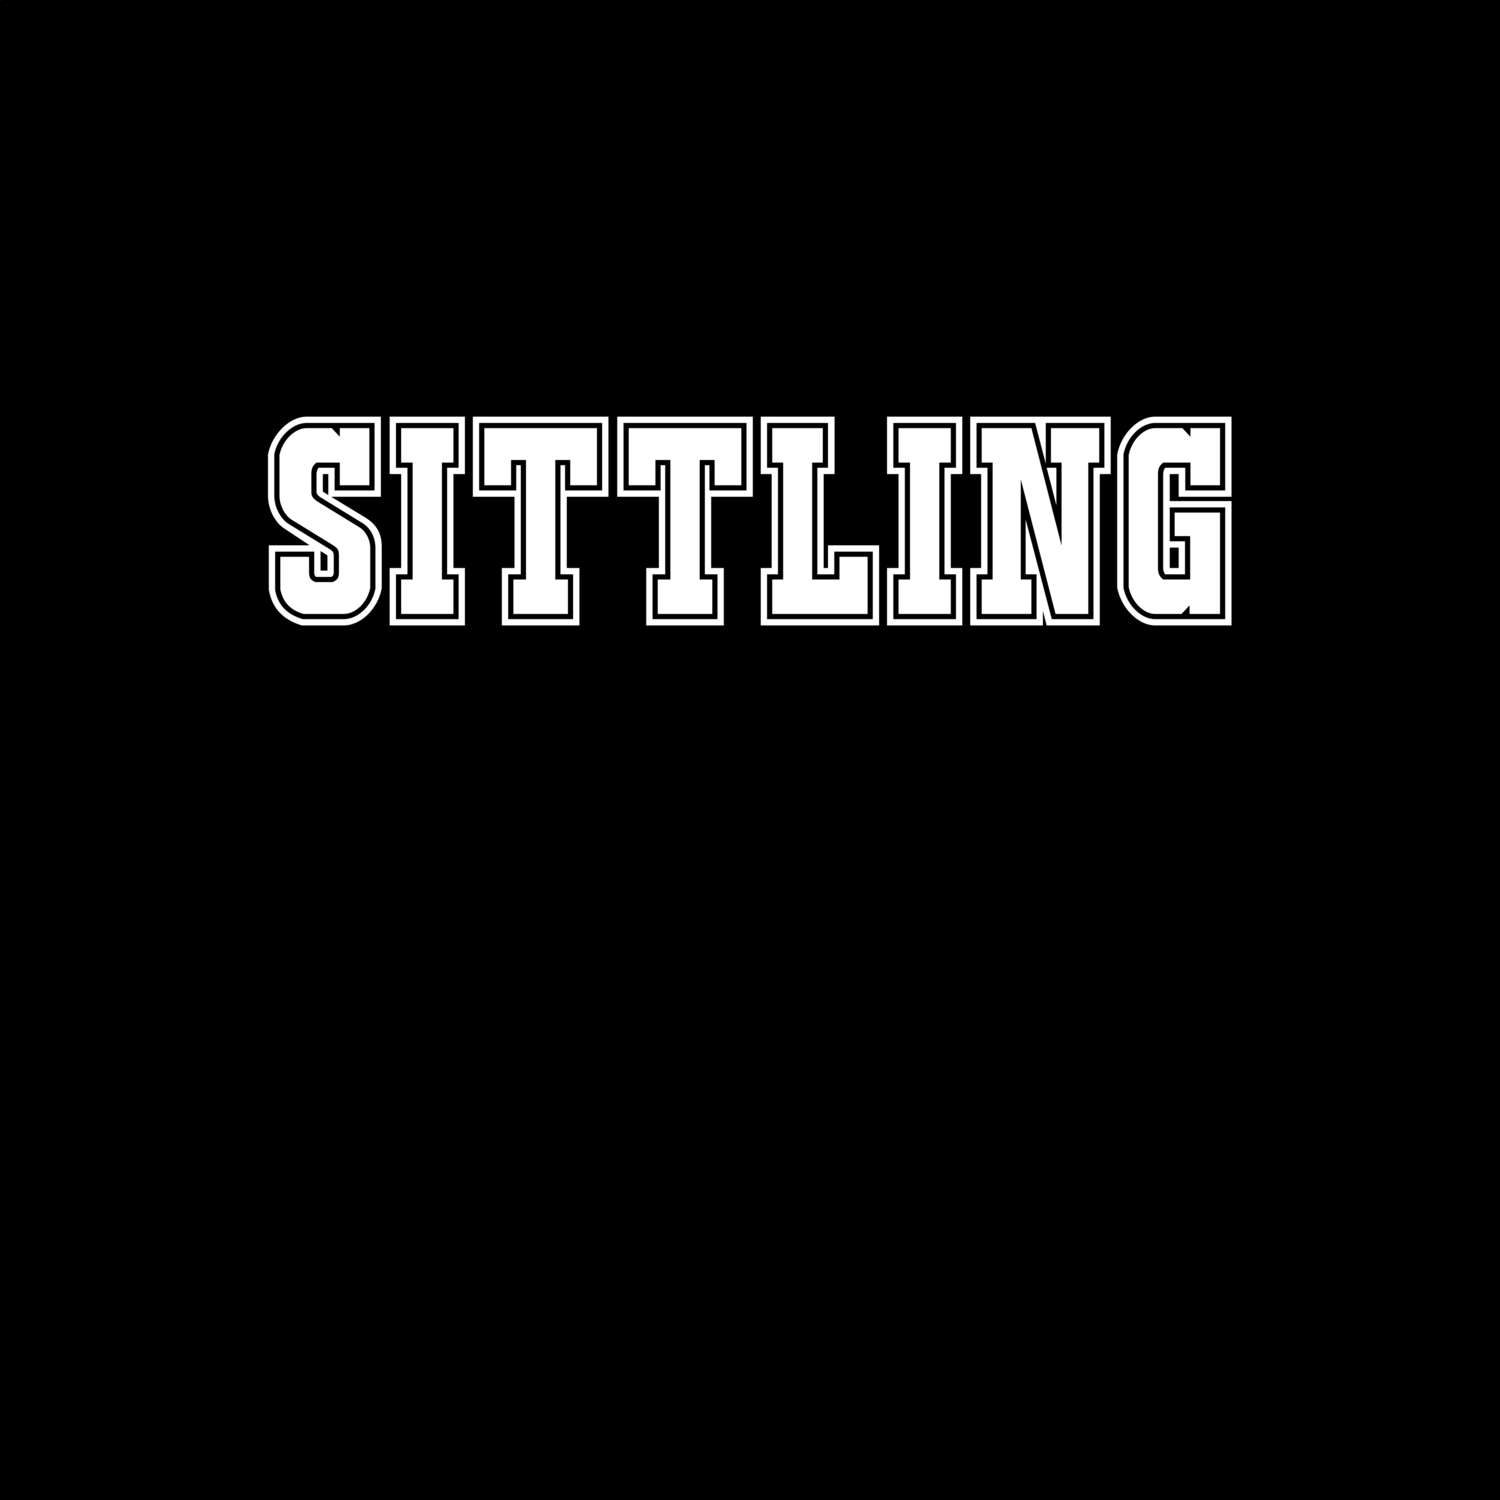 Sittling T-Shirt »Classic«